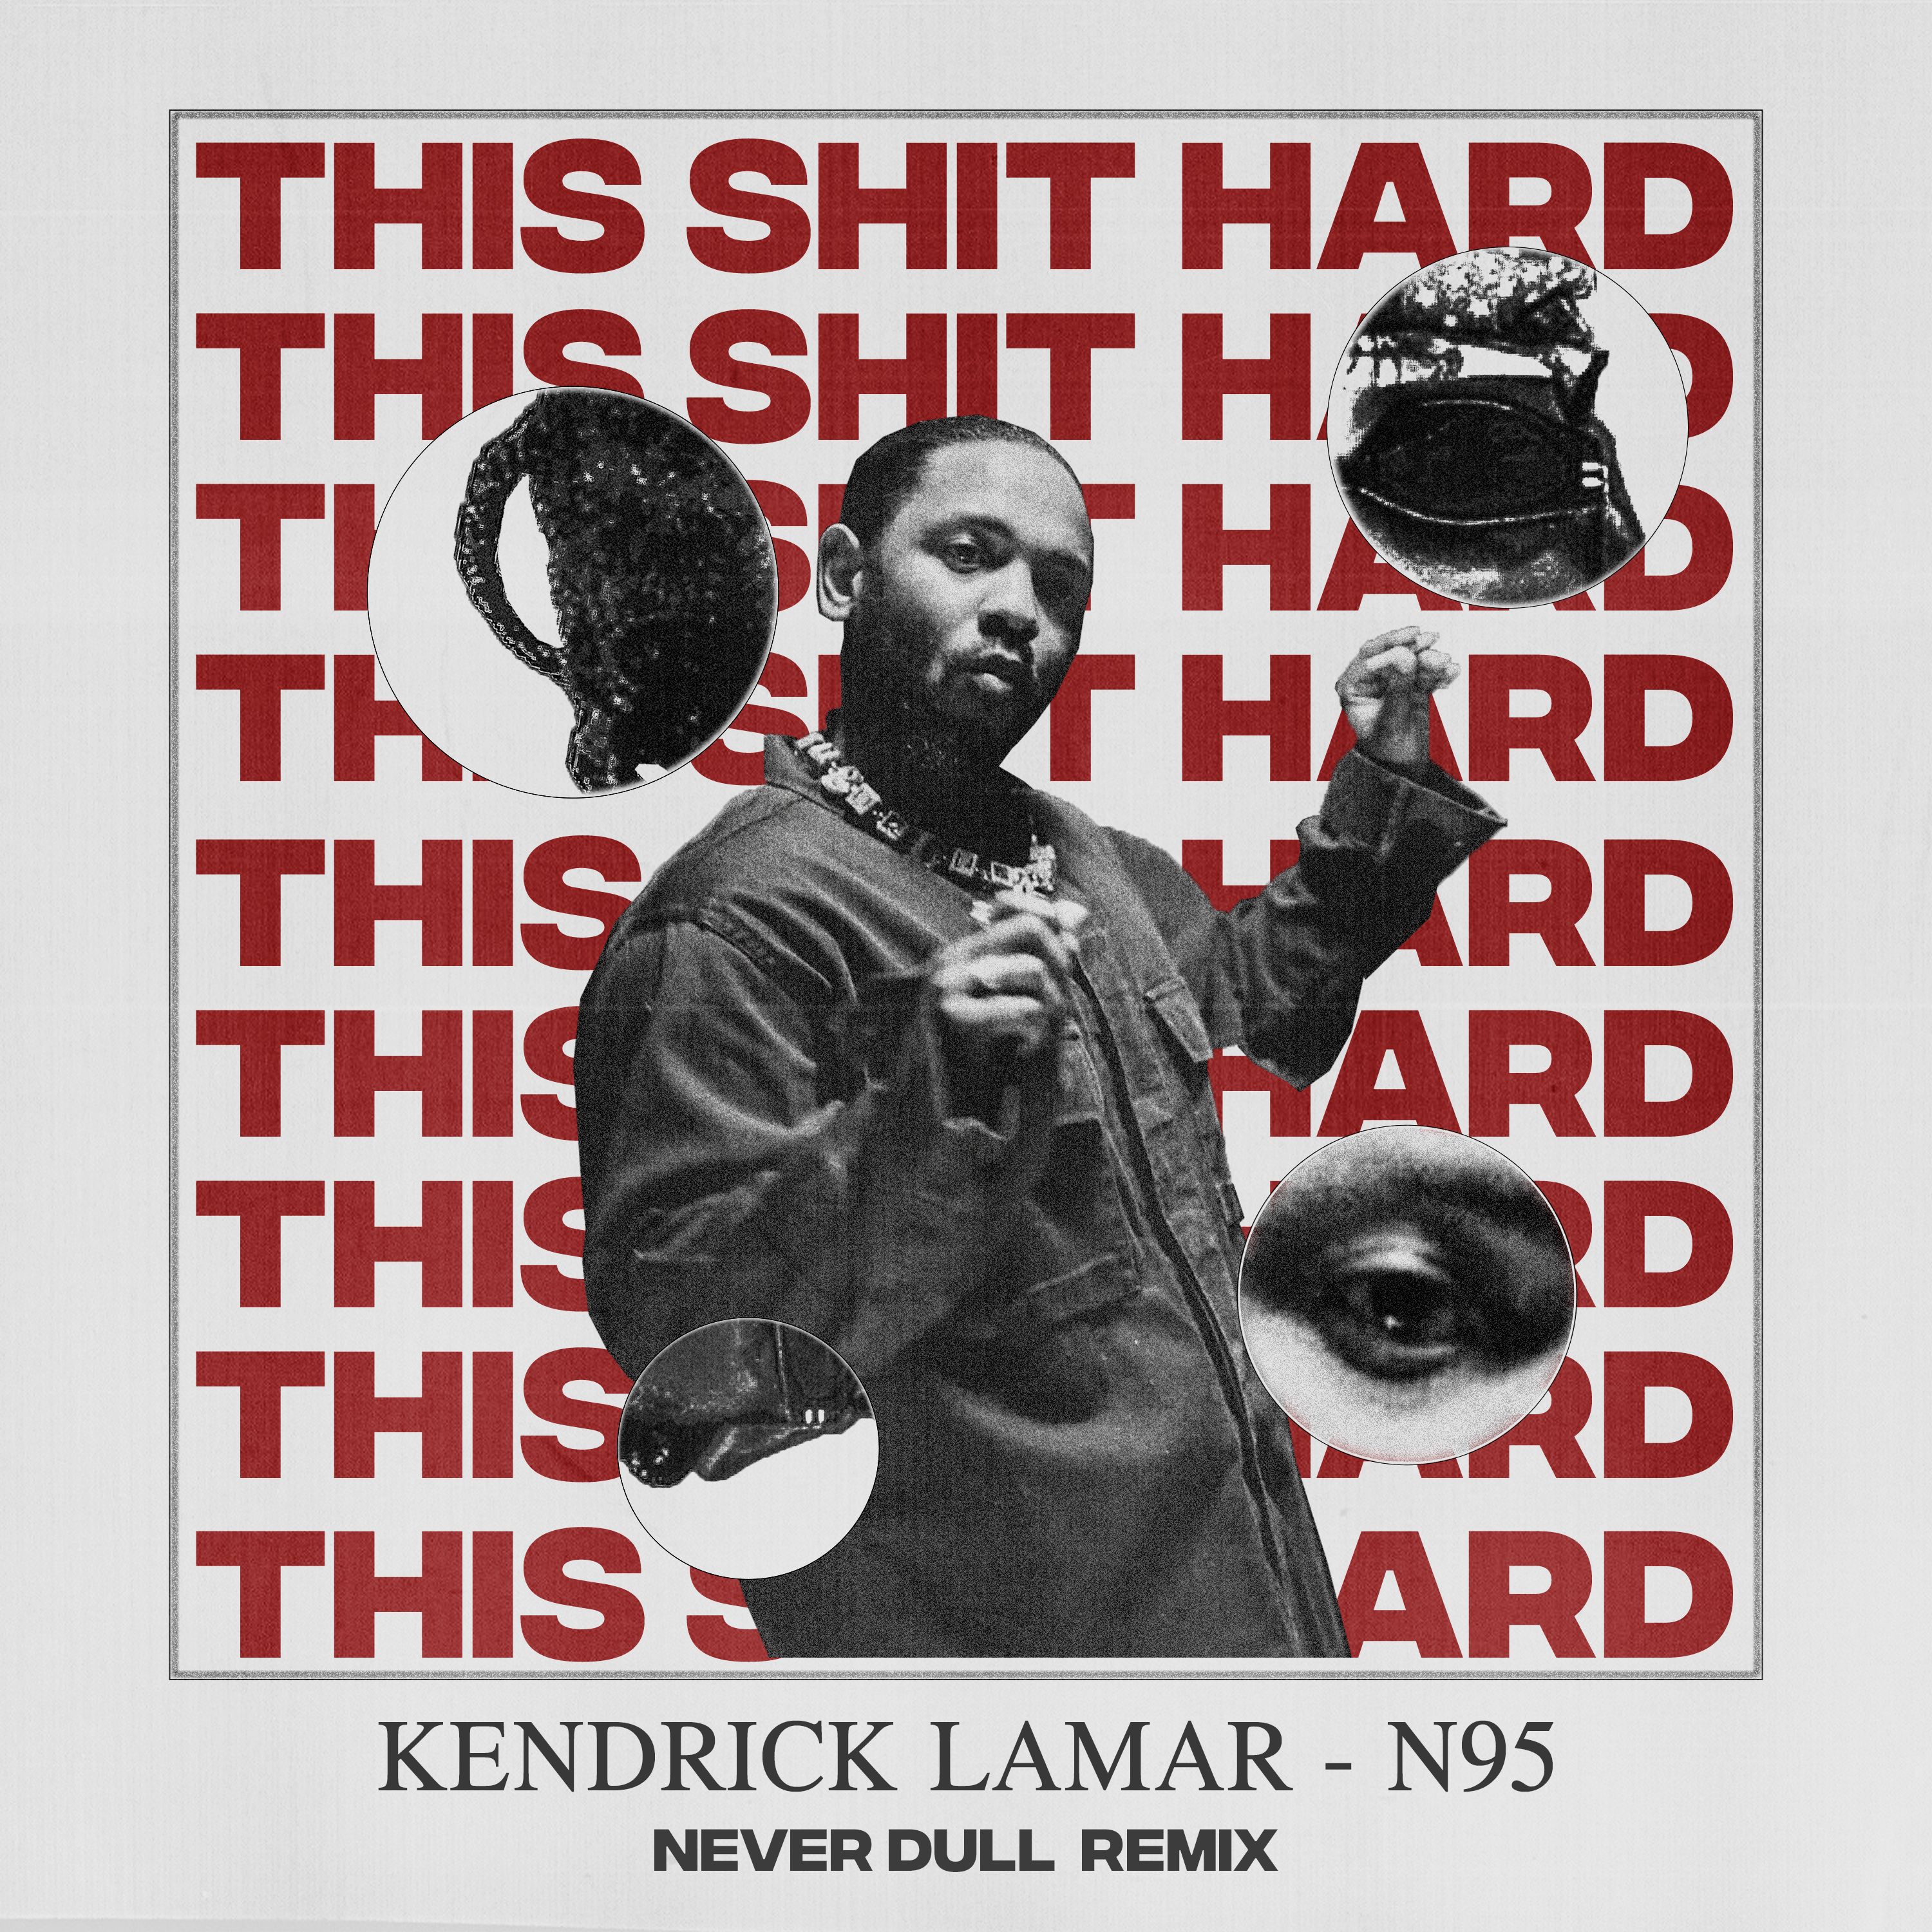 डाउनलोड करा Kendrick Lamar - N95 (Never Dull Remix)